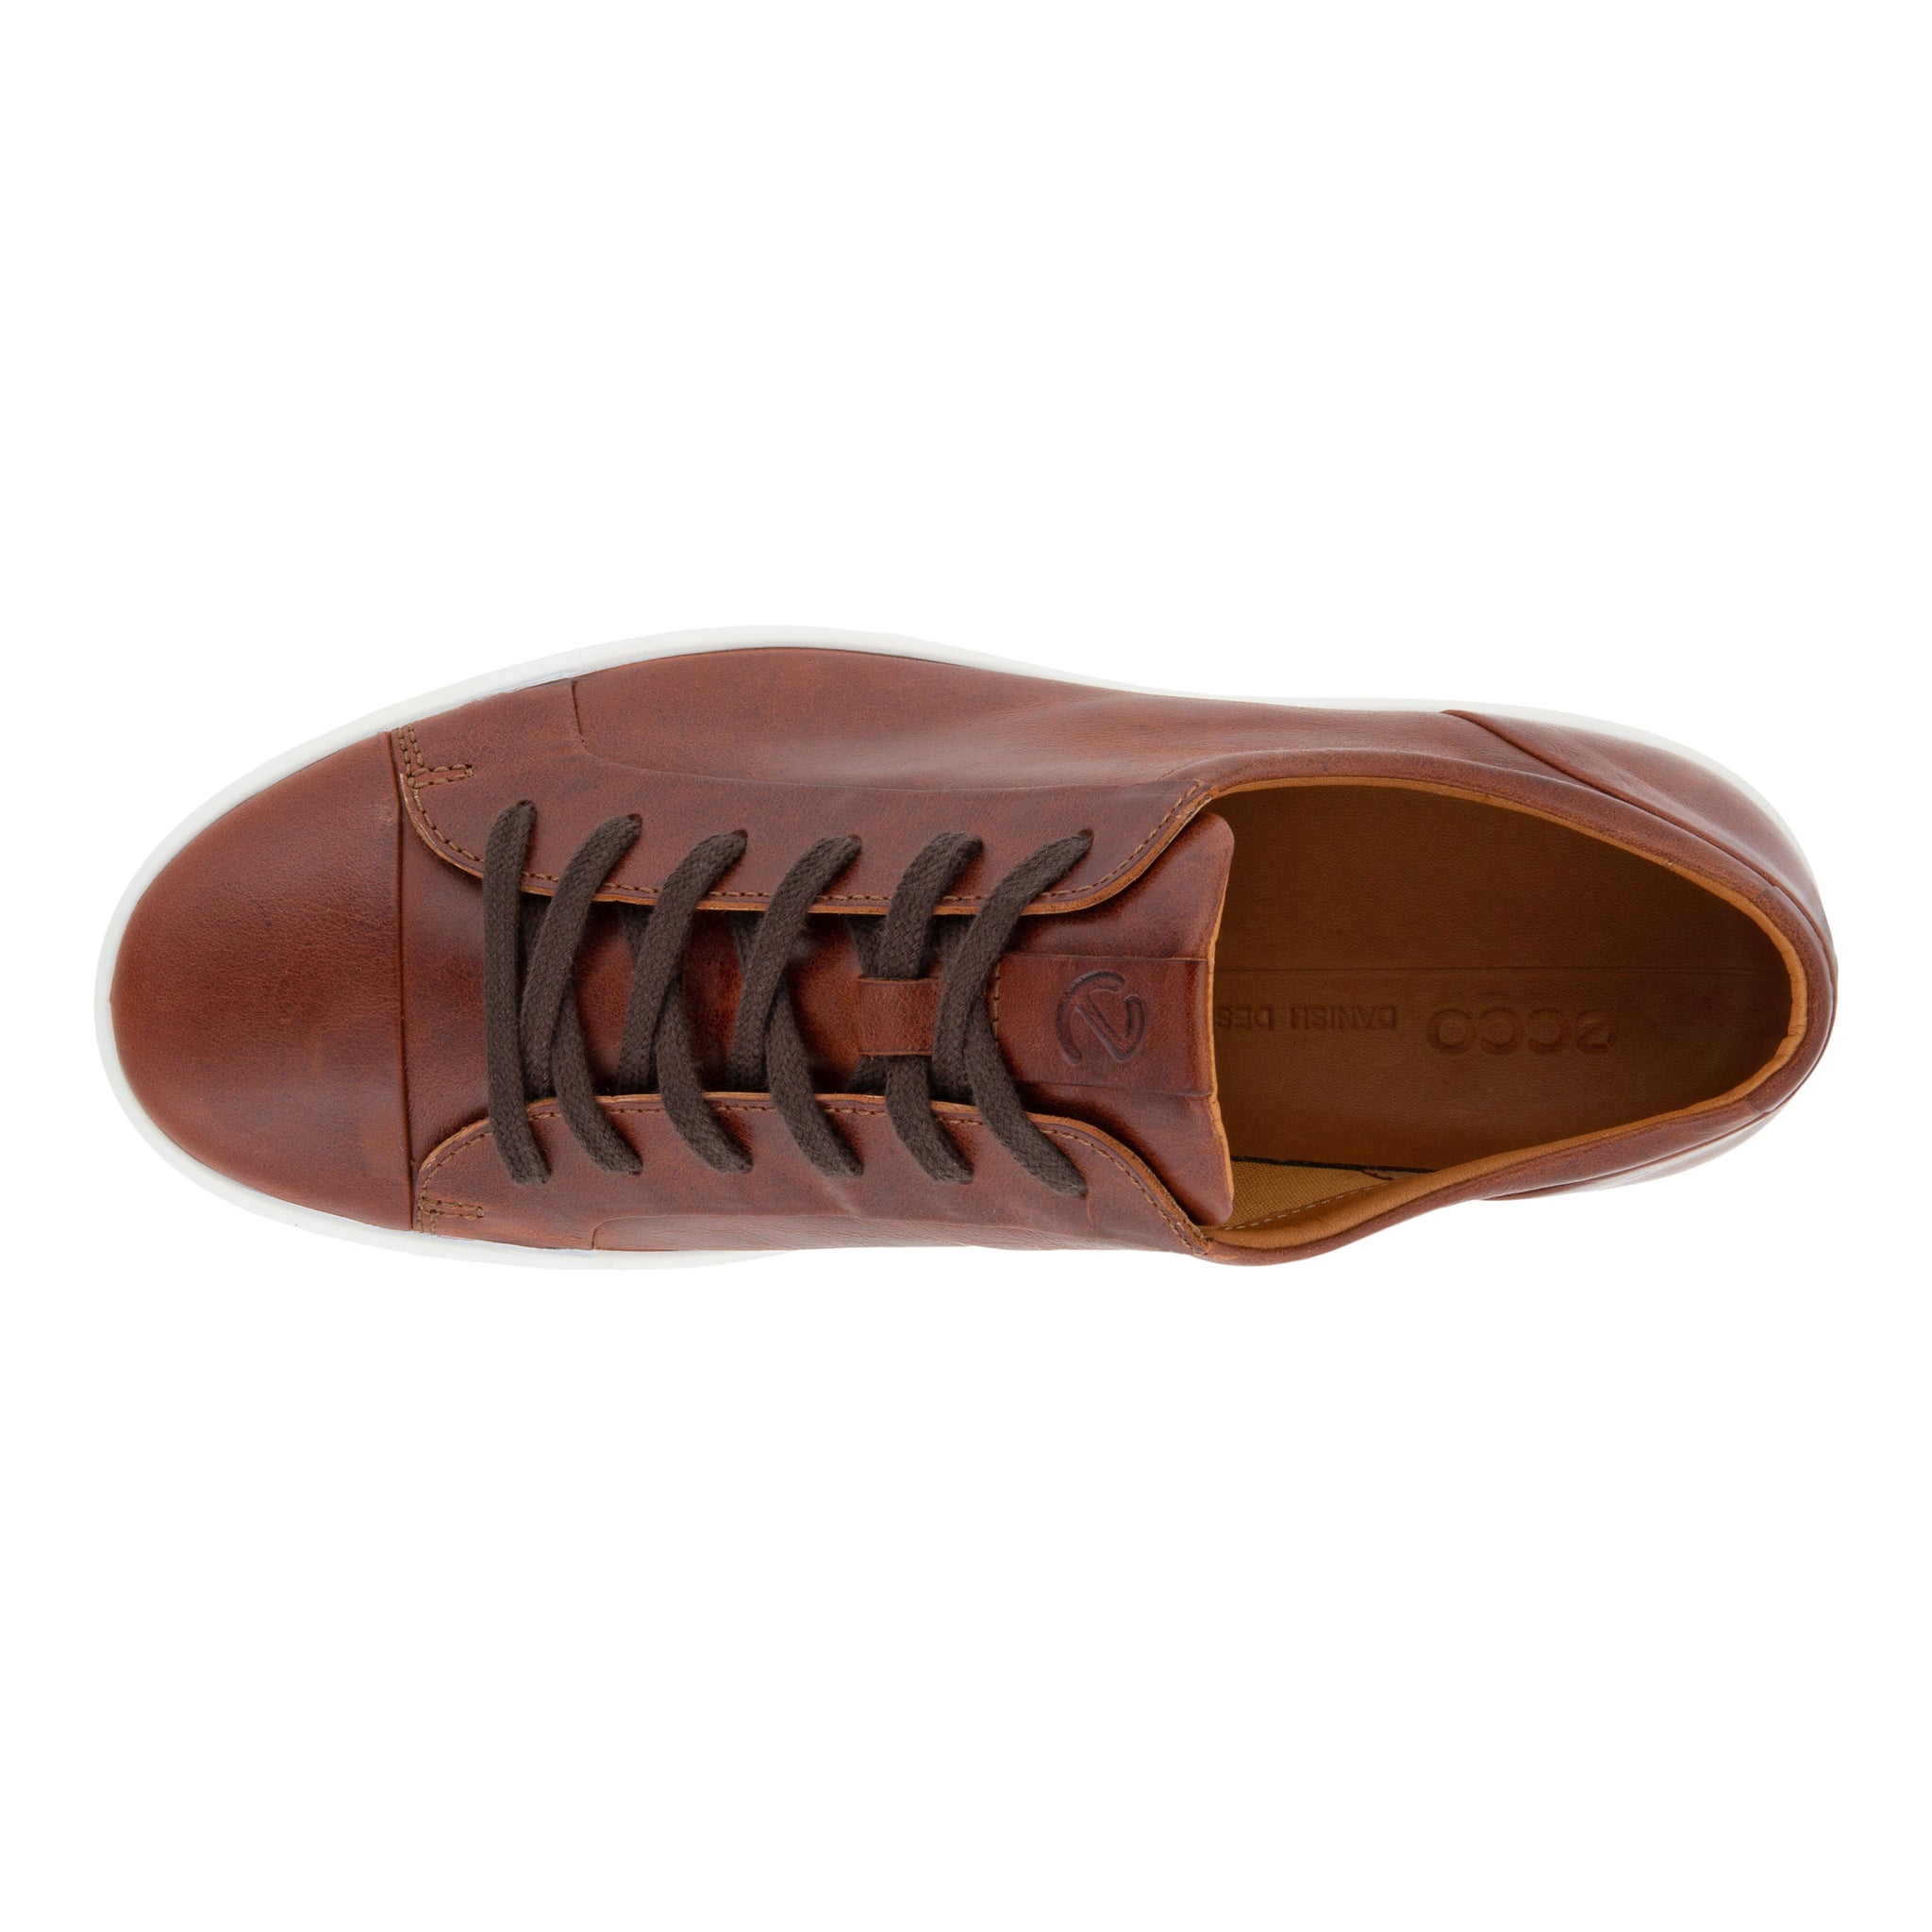 ECCO Soft 7 (470364) - Mens Casual Lace Shoe in Cognac . ECCO Shoes  | Wisemans | Bantry | West Cork | Ireland